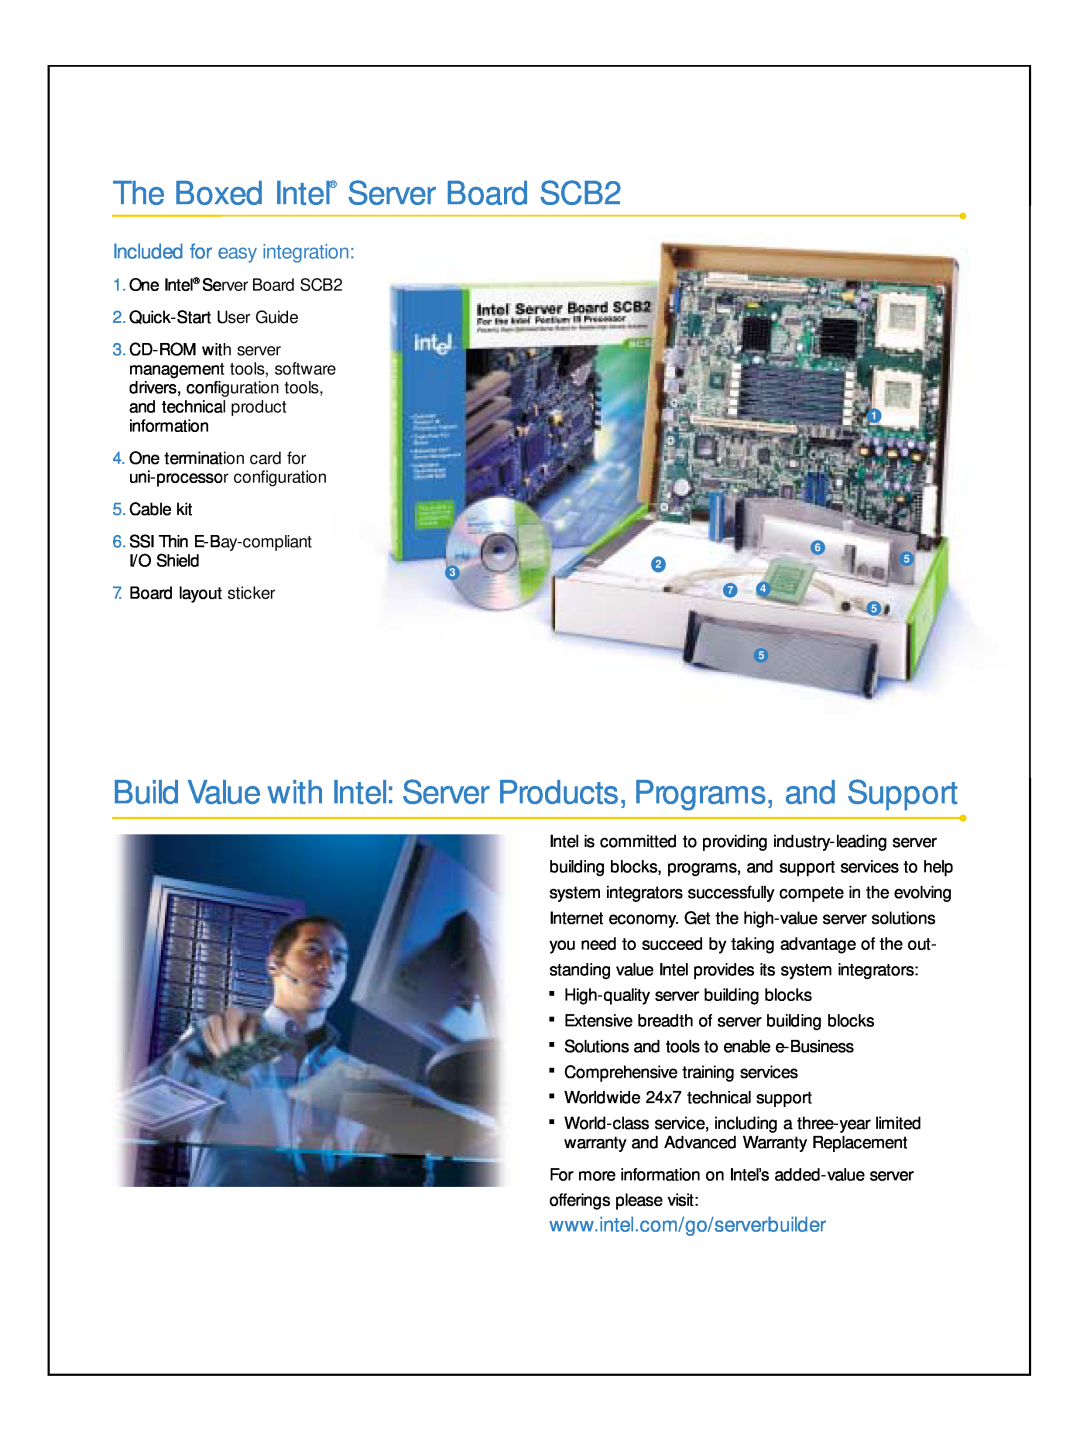 Intel manual The Boxed Intel Server Board SCB2, Included for easy integration, SSI Thin E-Bay-compliant, I/O Shield 